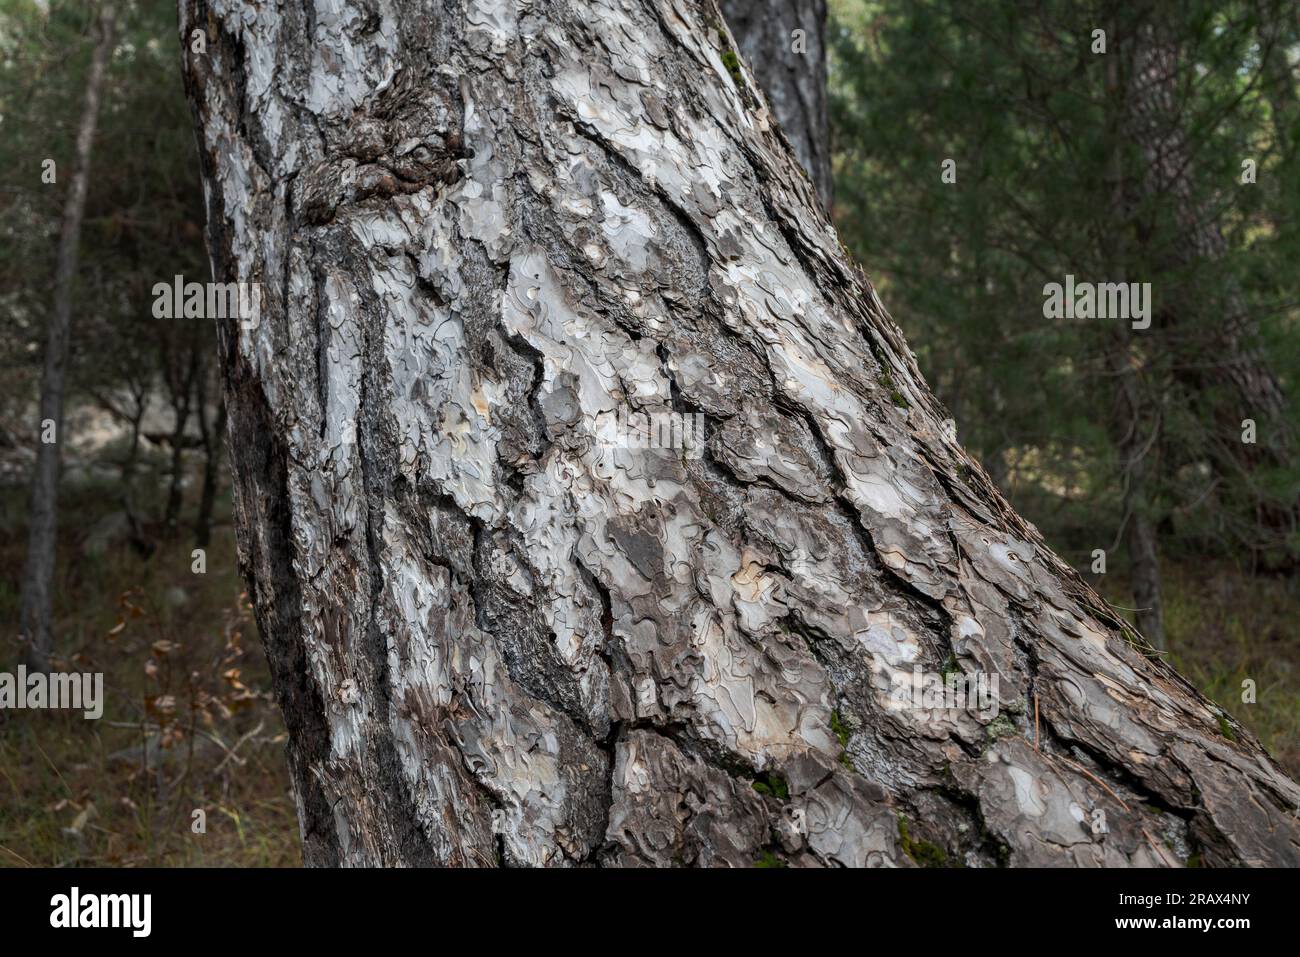 Bark of Austrian pine, Pinus nigra. Photo taken in the Natural Park of Cazorla, Segura y las Villas, in the province of Jaen, Andalusia, Spain Stock Photo